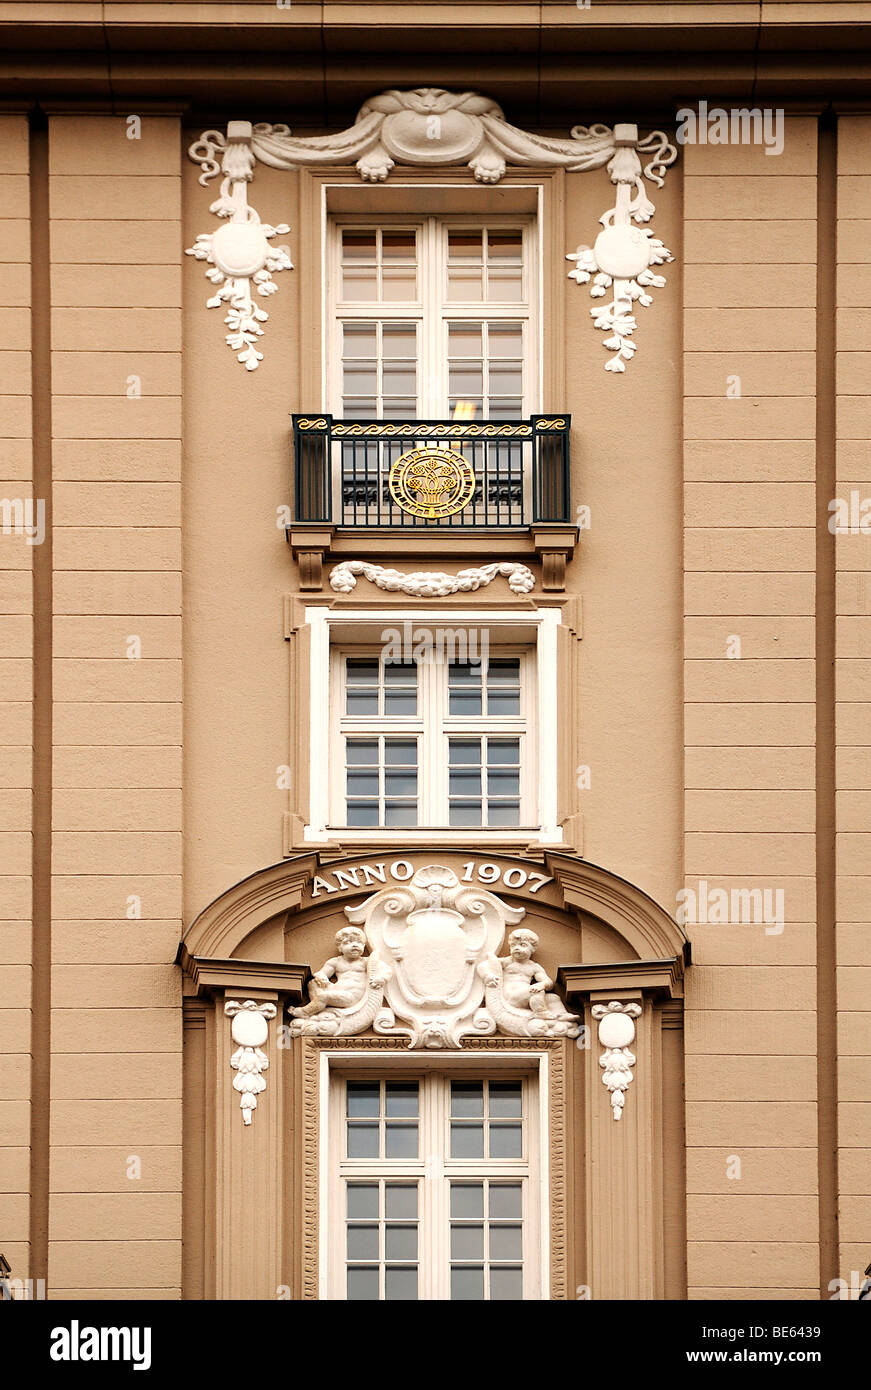 Decorative facade, detail, from 1907, now Casino, Hamburg, Germany, Europe Stock Photo